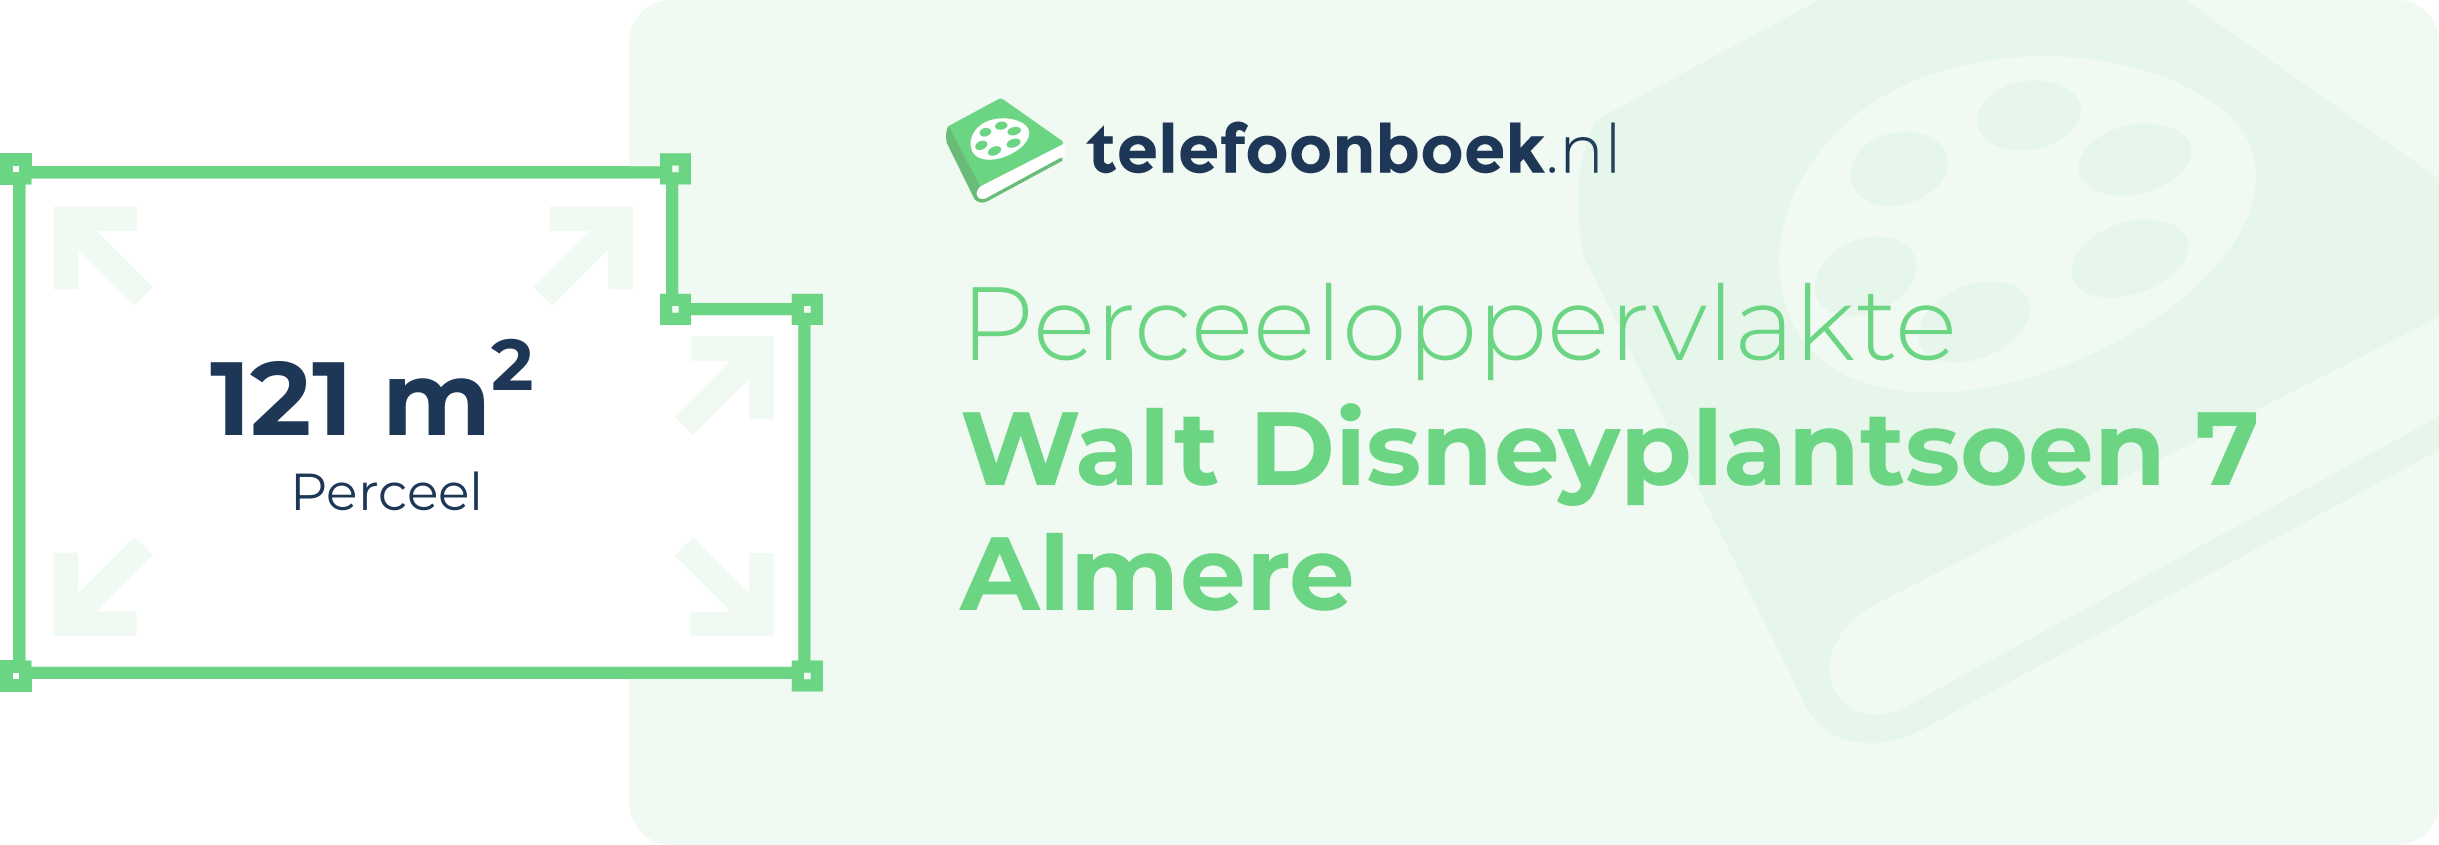 Perceeloppervlakte Walt Disneyplantsoen 7 Almere